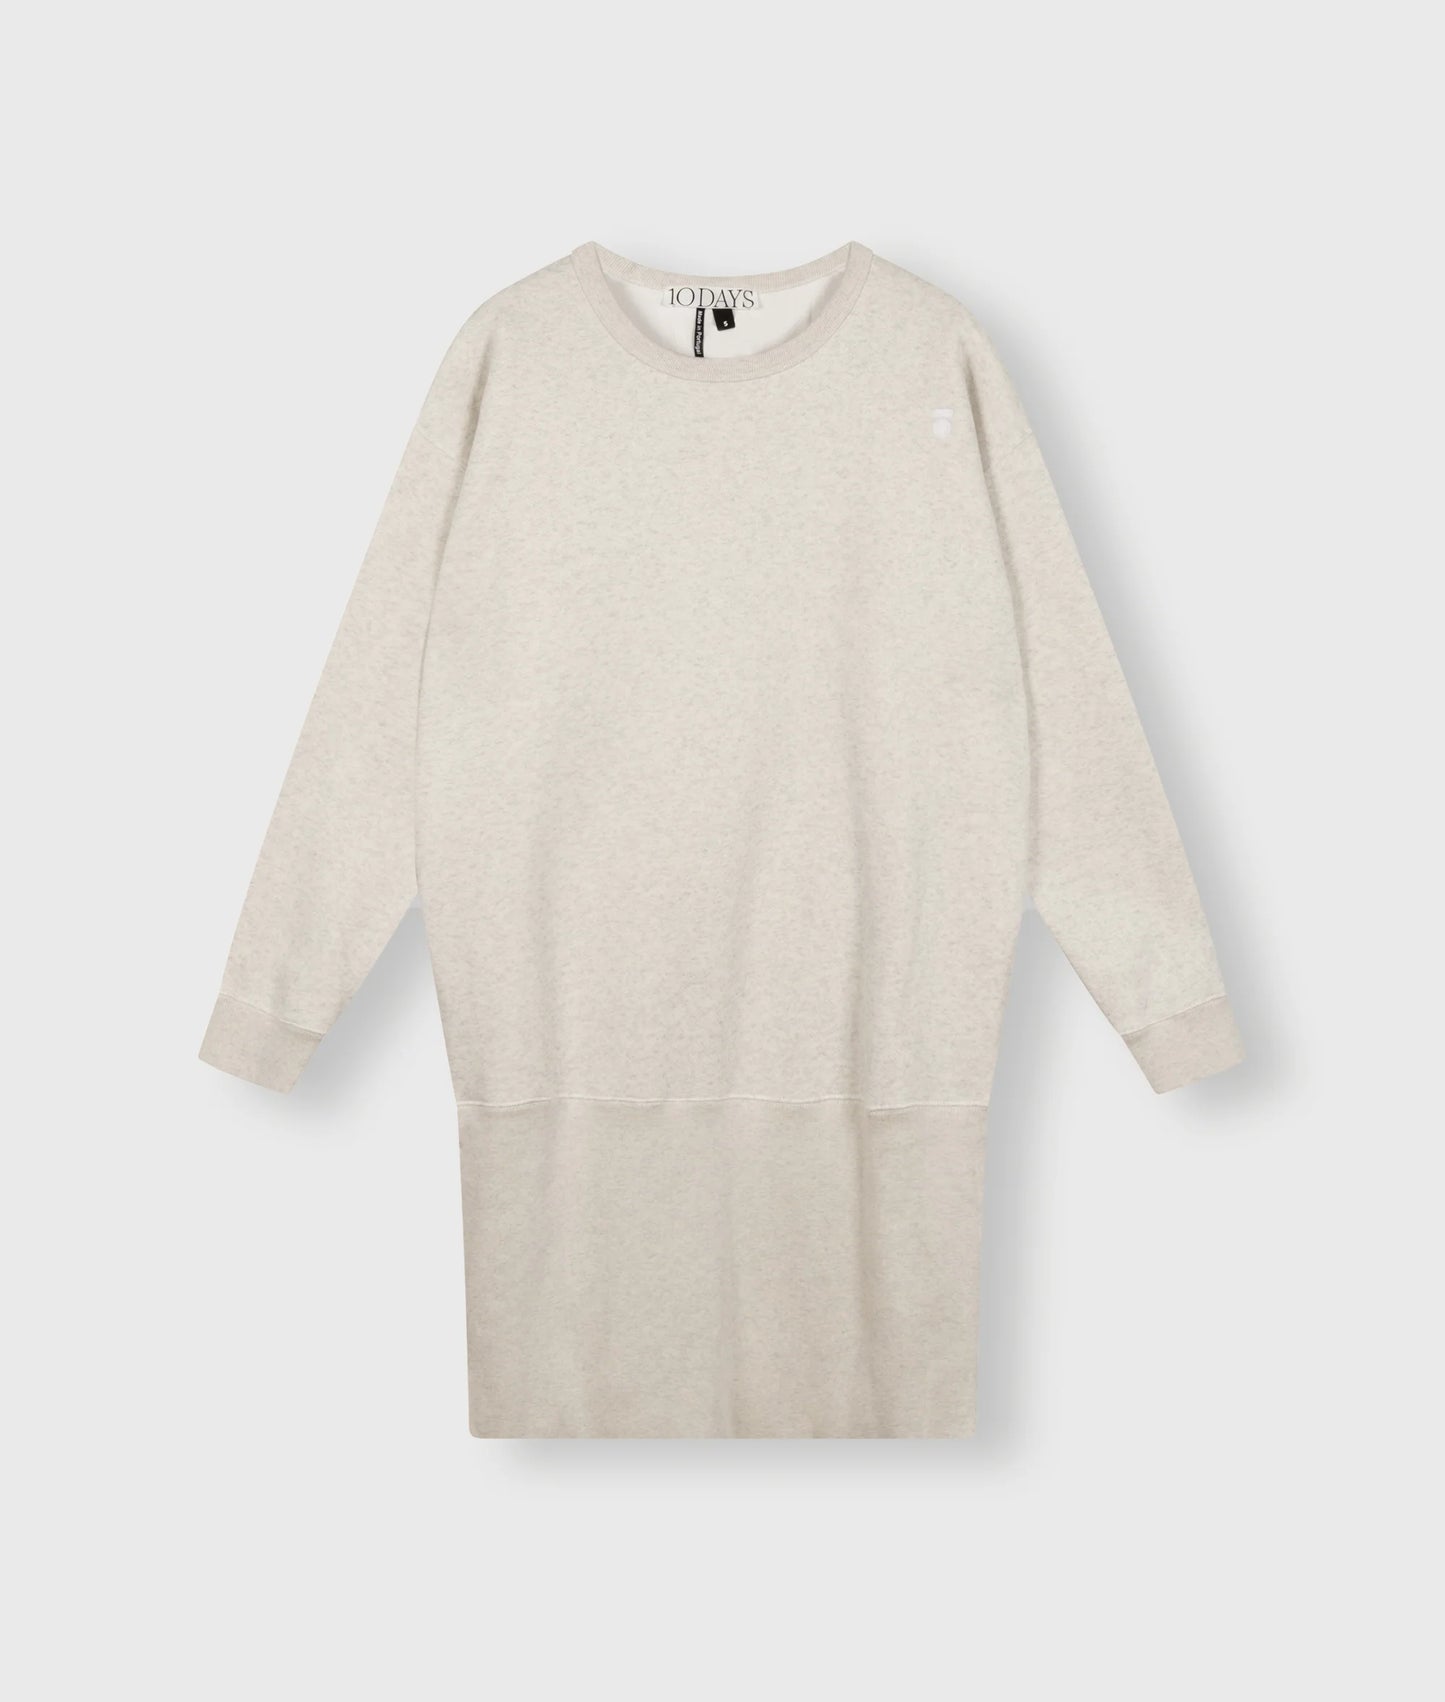 10Days | Sweater Dress Sabbatical - Soft white melee